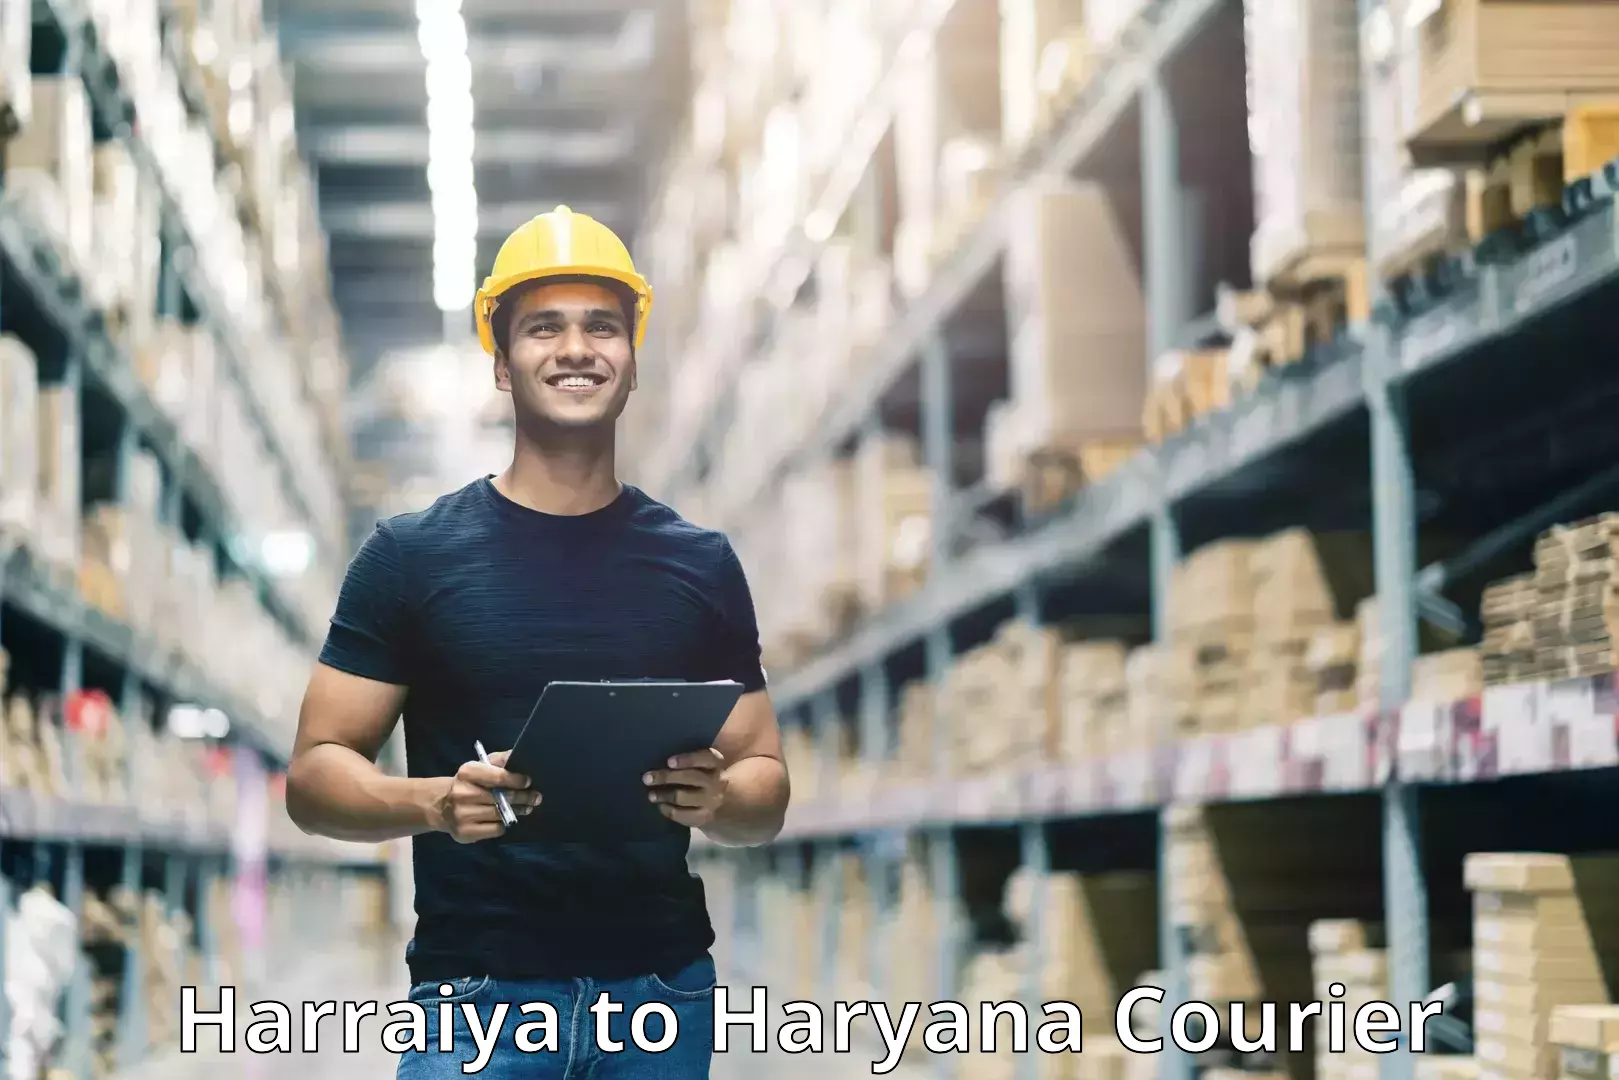 On-demand delivery Harraiya to Haryana